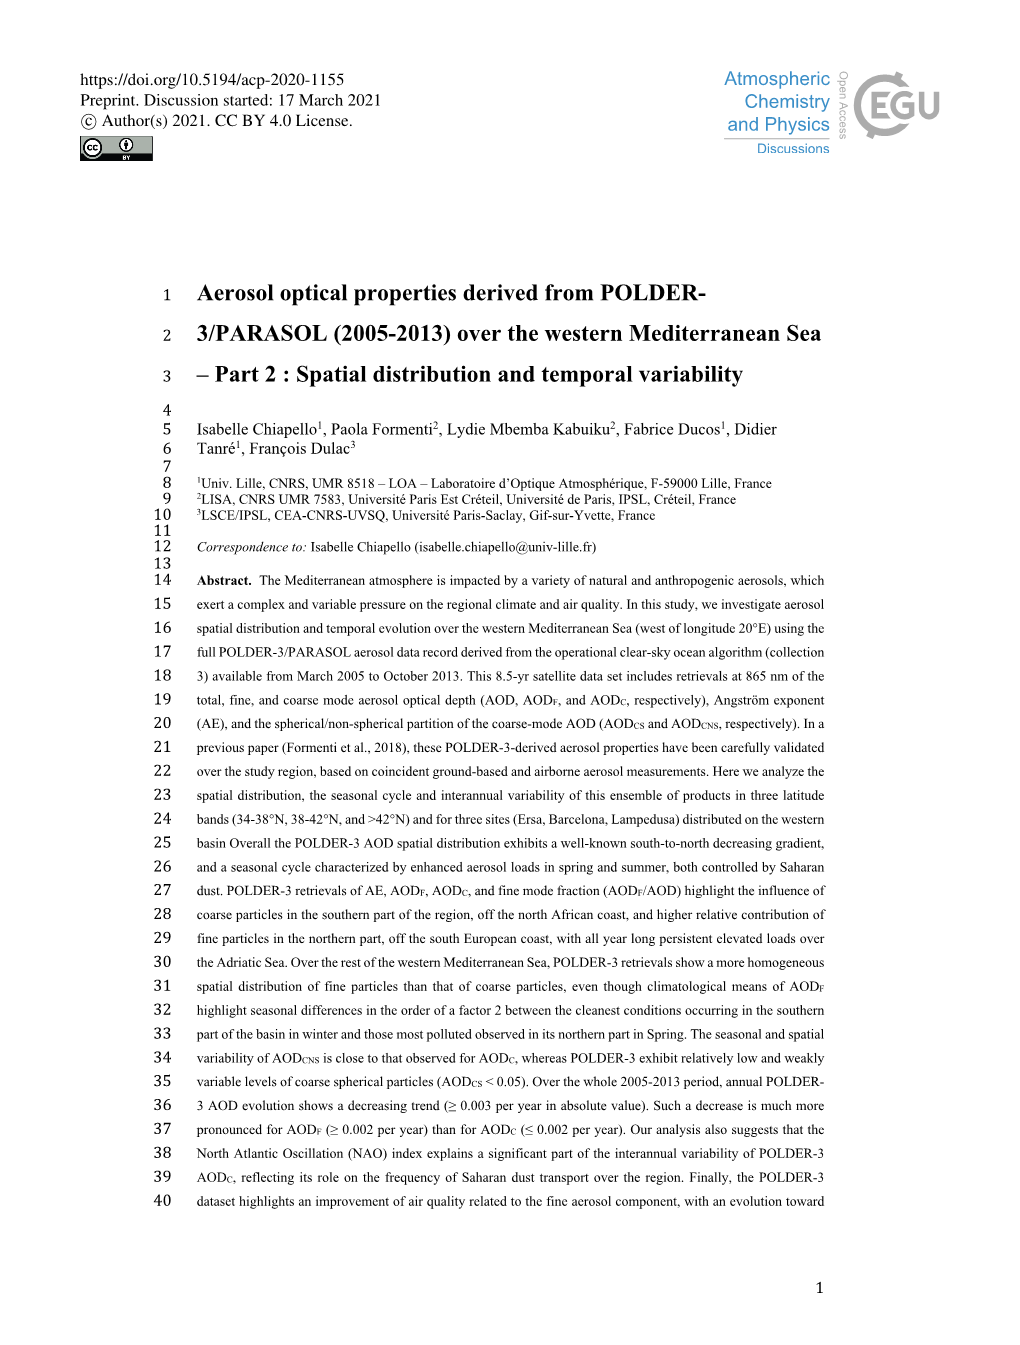 Aerosol Optical Properties Derived from POLDER- 3/PARASOL (2005